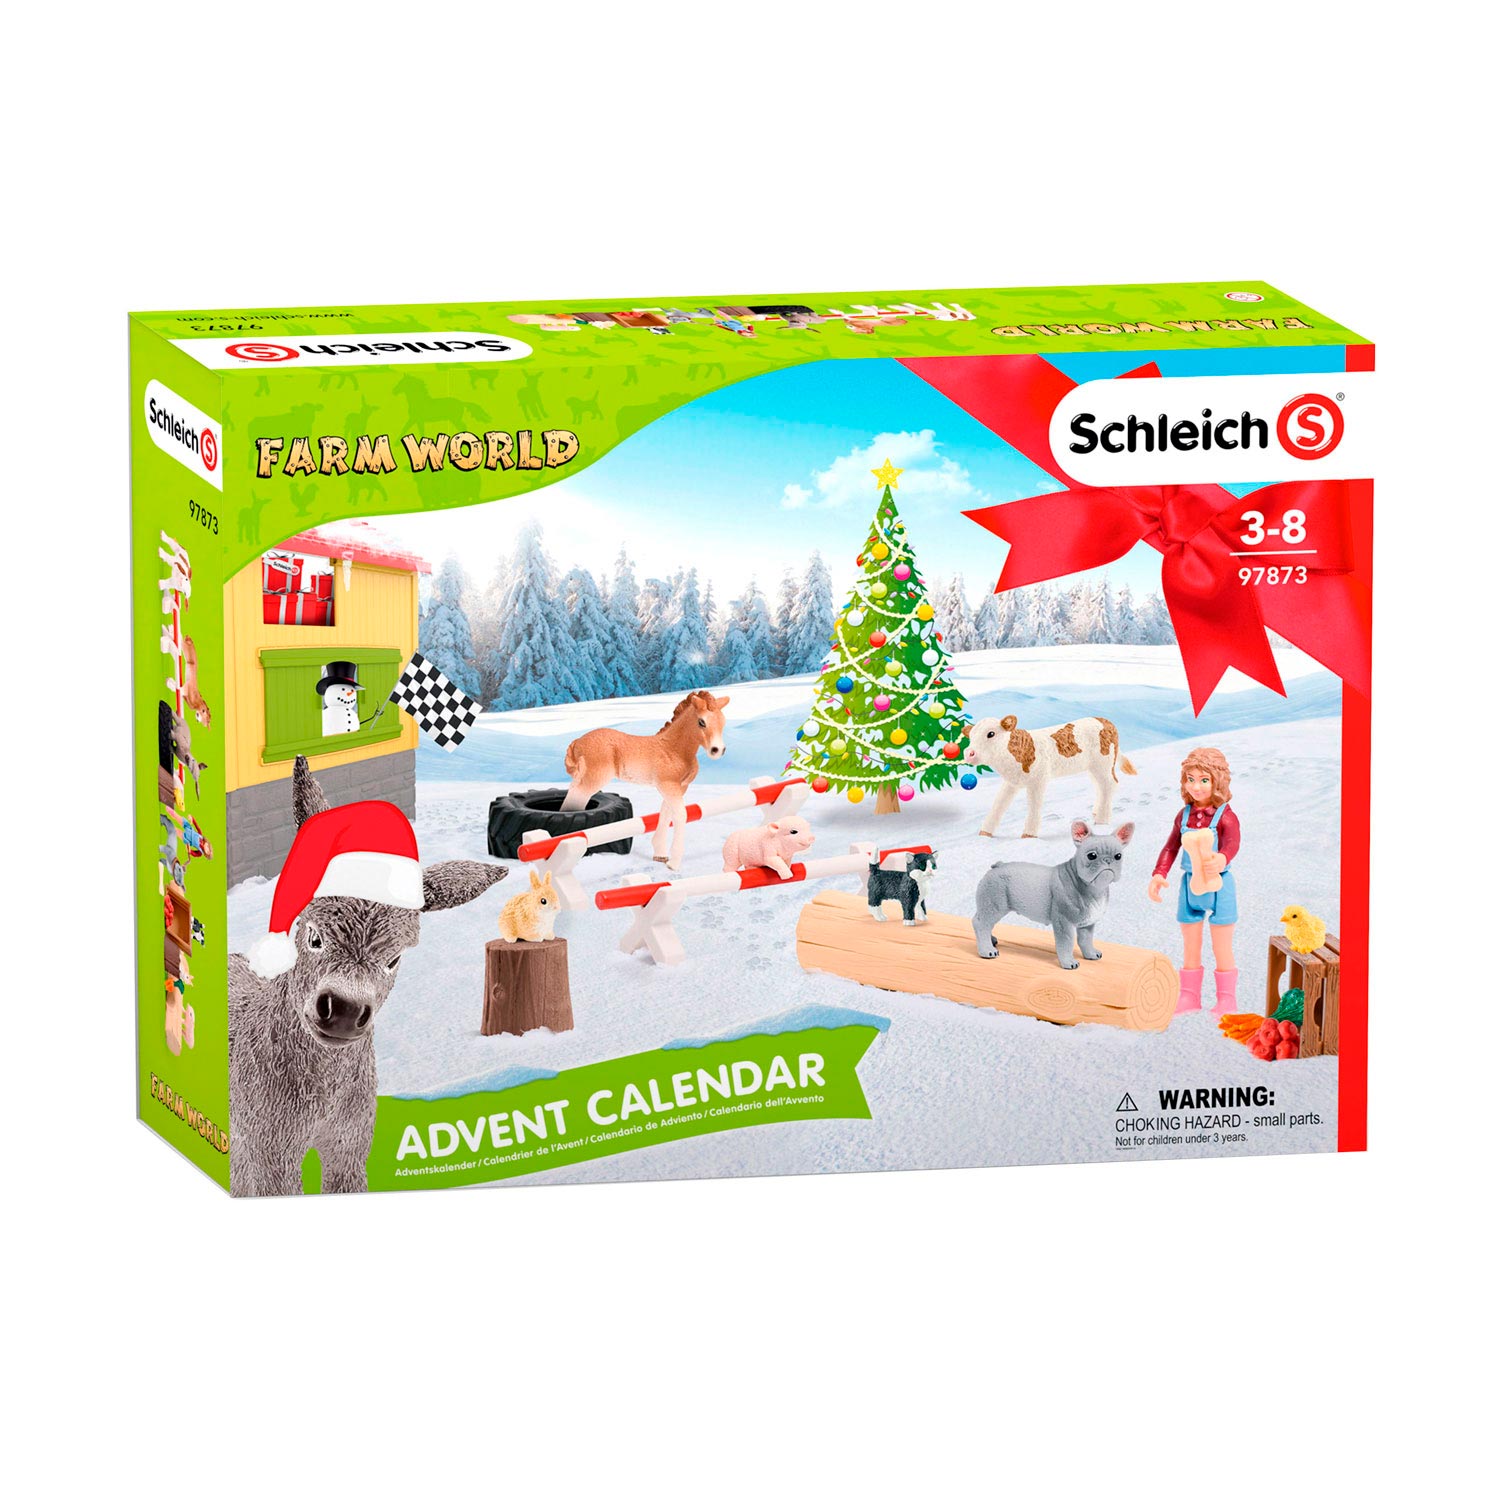 Schleich Advent Calendar Farm World Thimble Toys